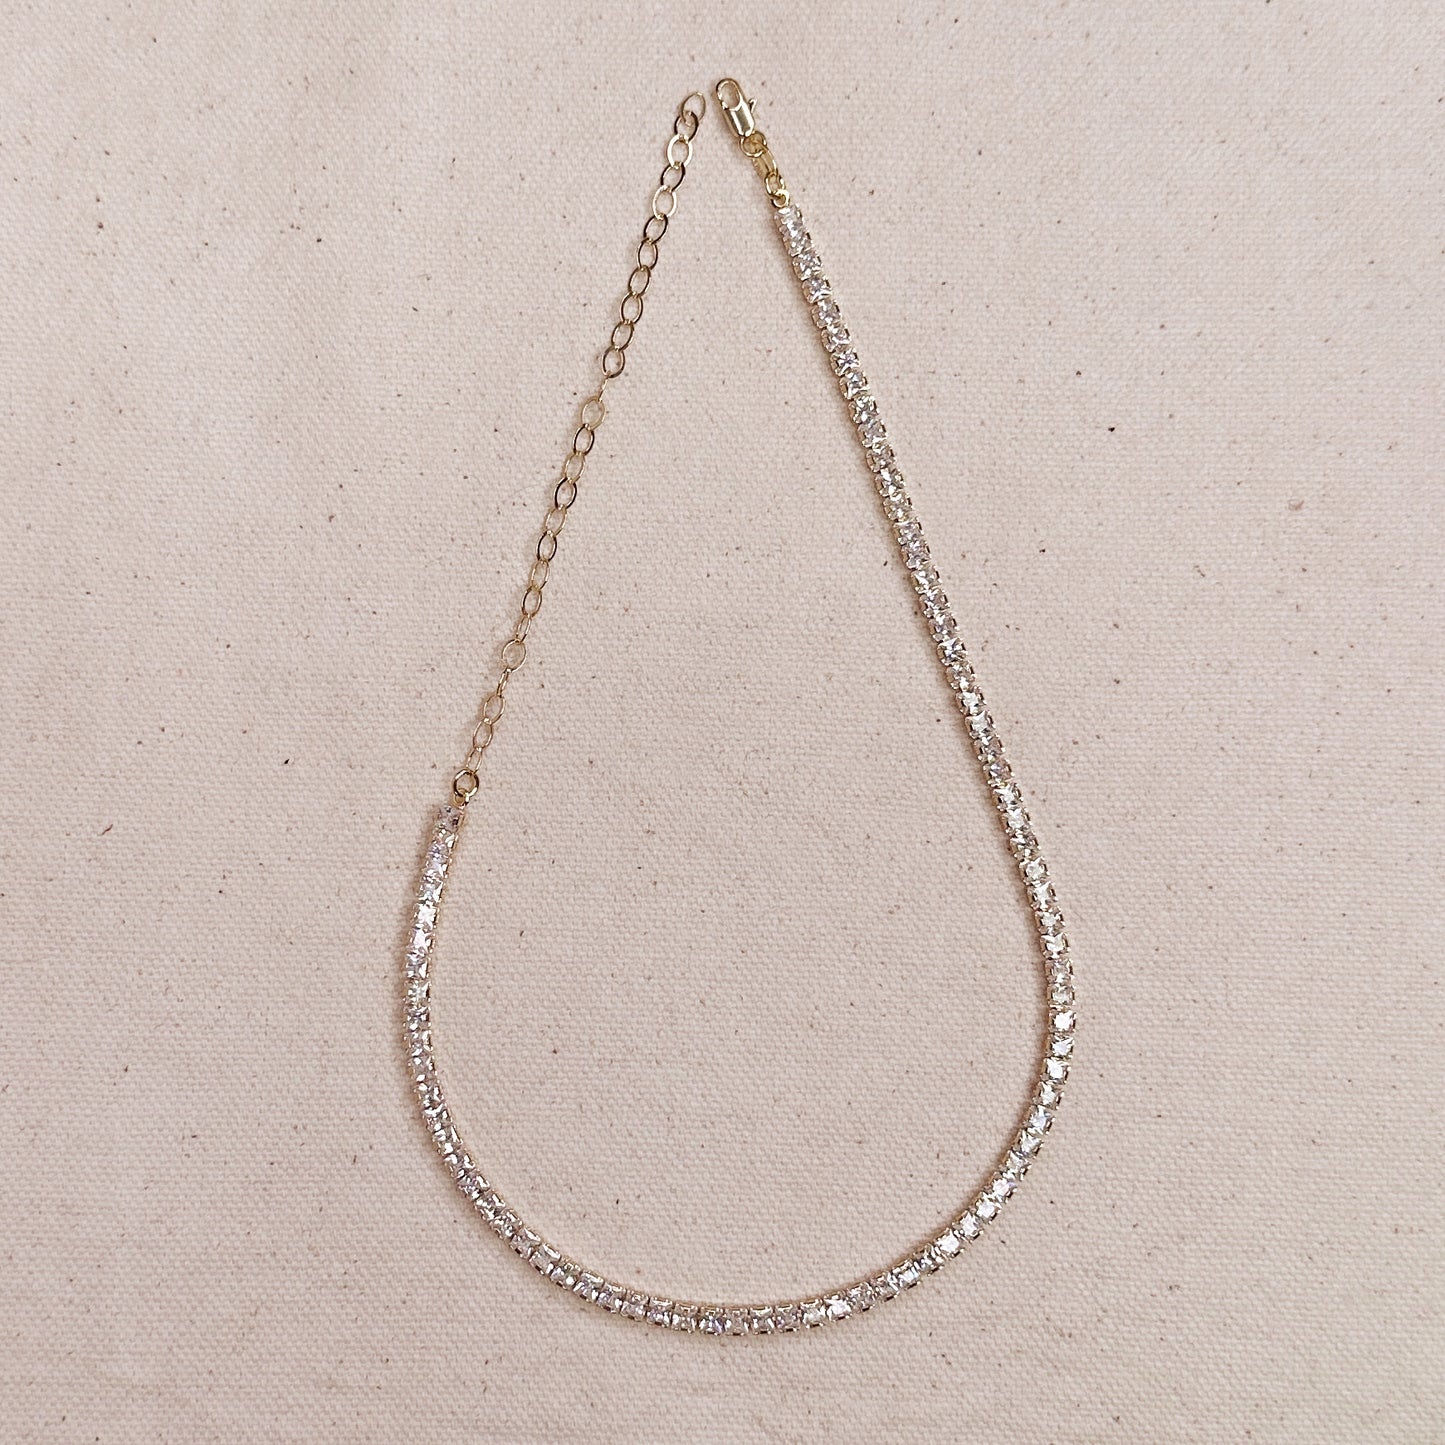 18k Gold Filled 3mm CZ Tennis Necklace